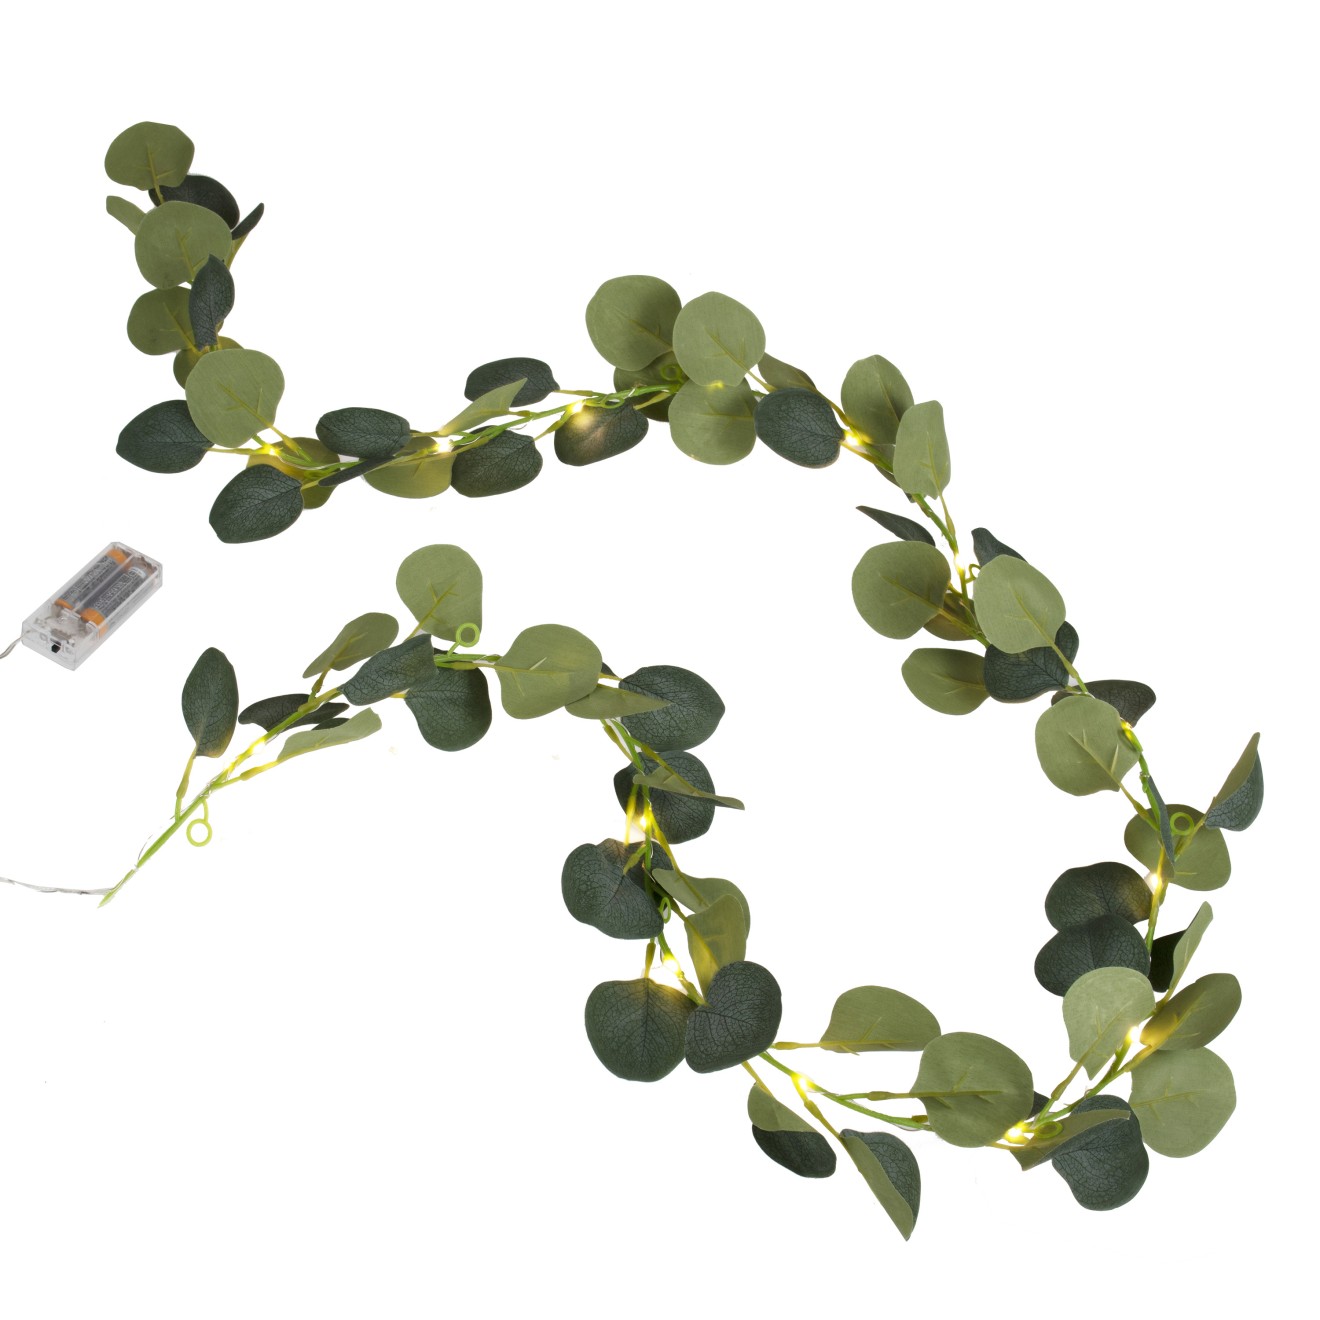 1 Foliage Lights - Eucalyptus With Lights